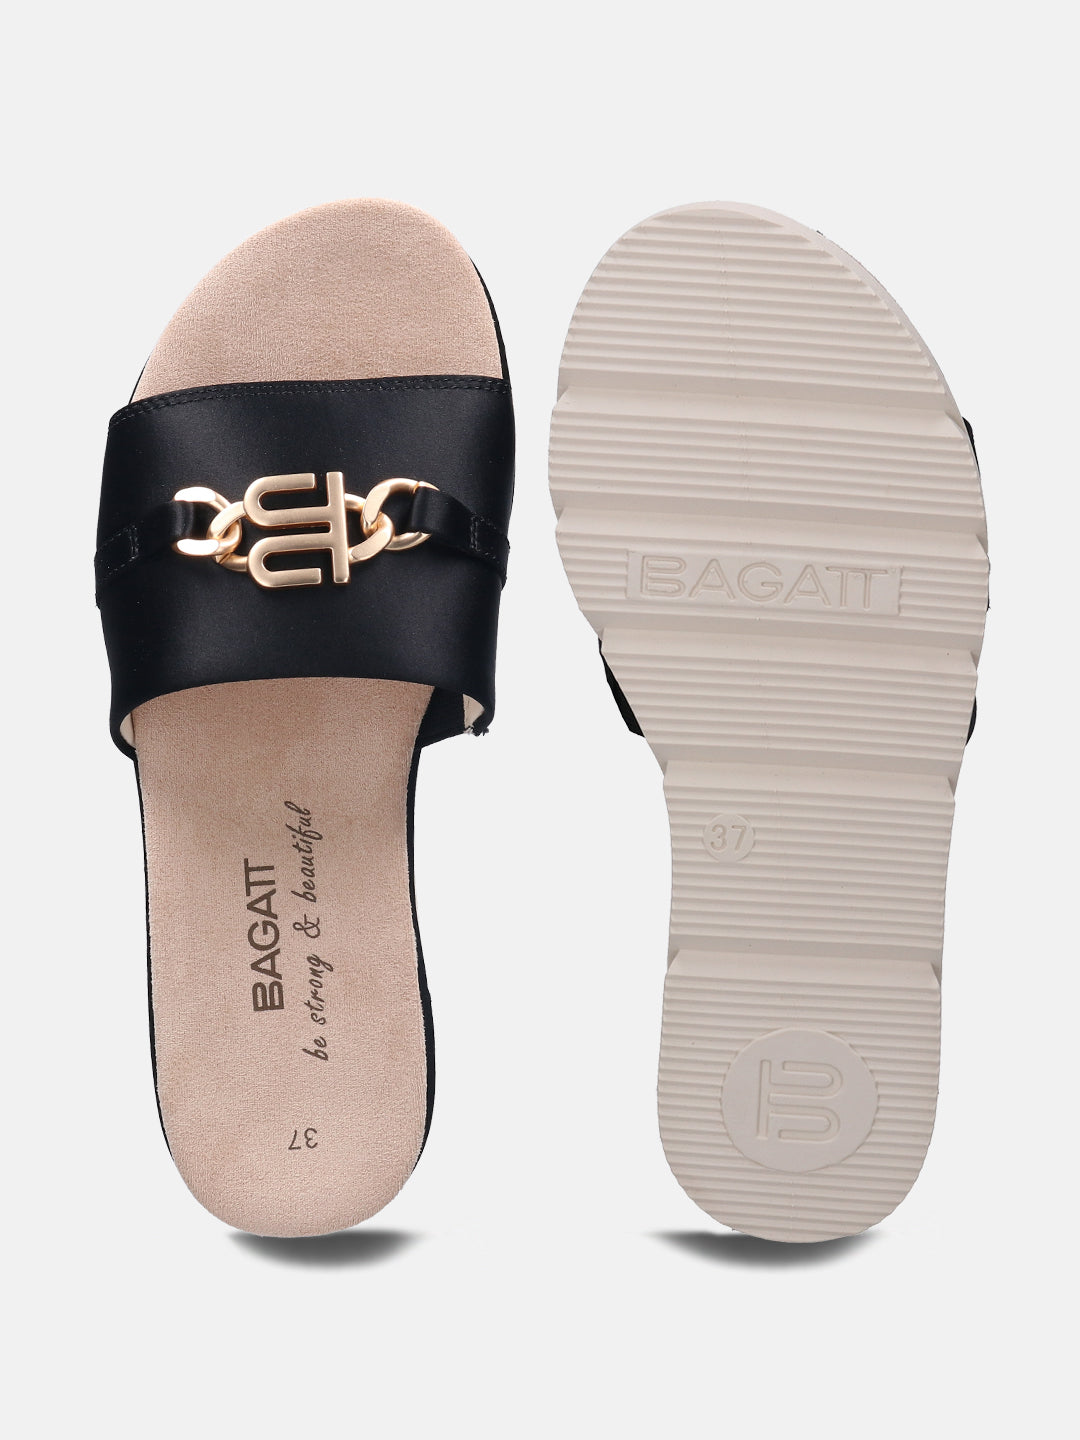 Kiko Black Flatform Sandals - BAGATT